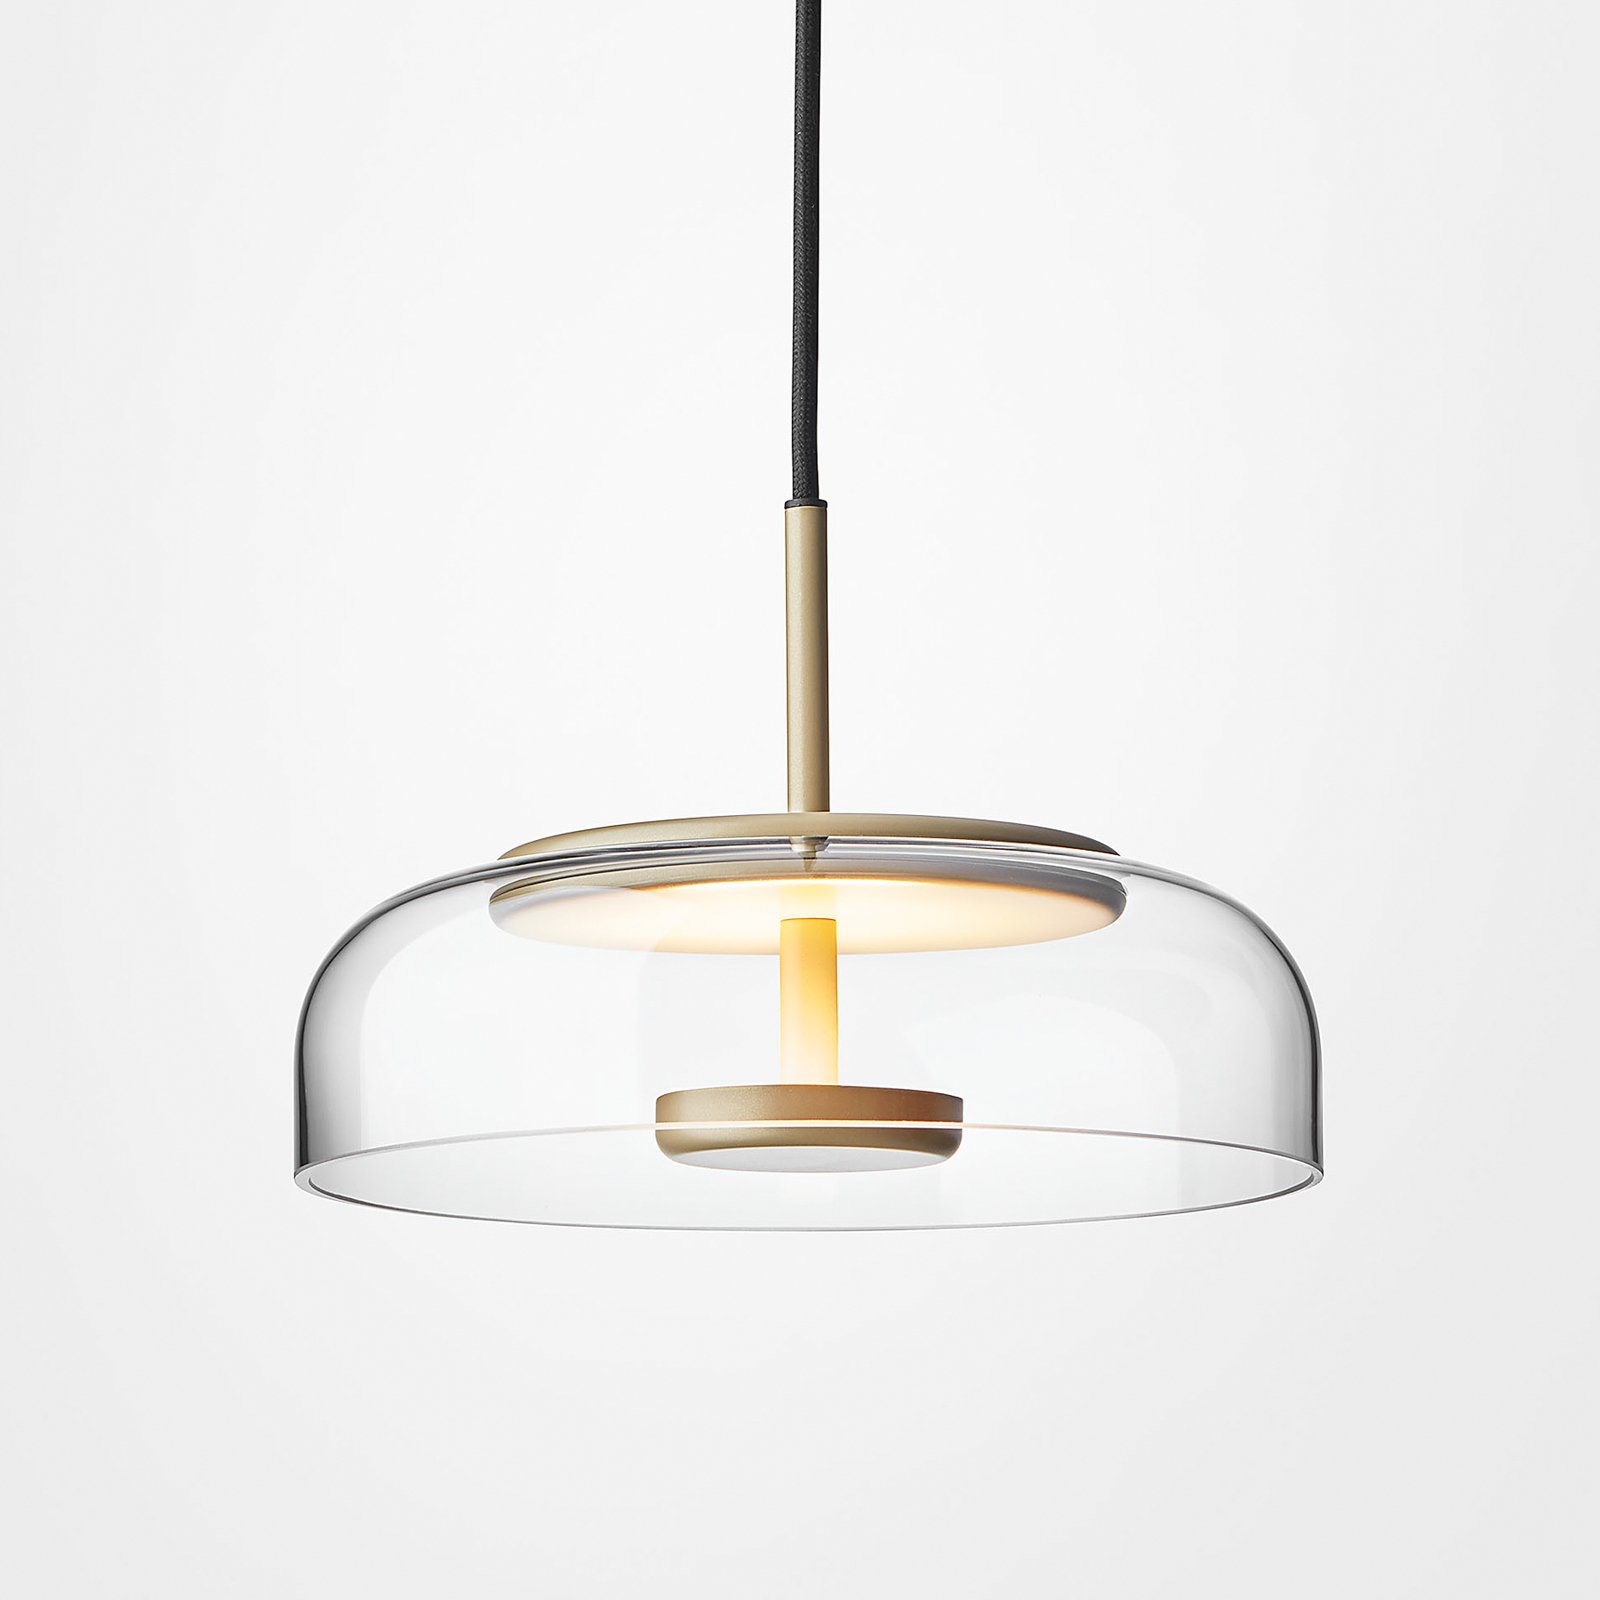 Nuura LED viseče svetilo Blossi 1, zlato / prozorno, Ø 23 cm, steklo